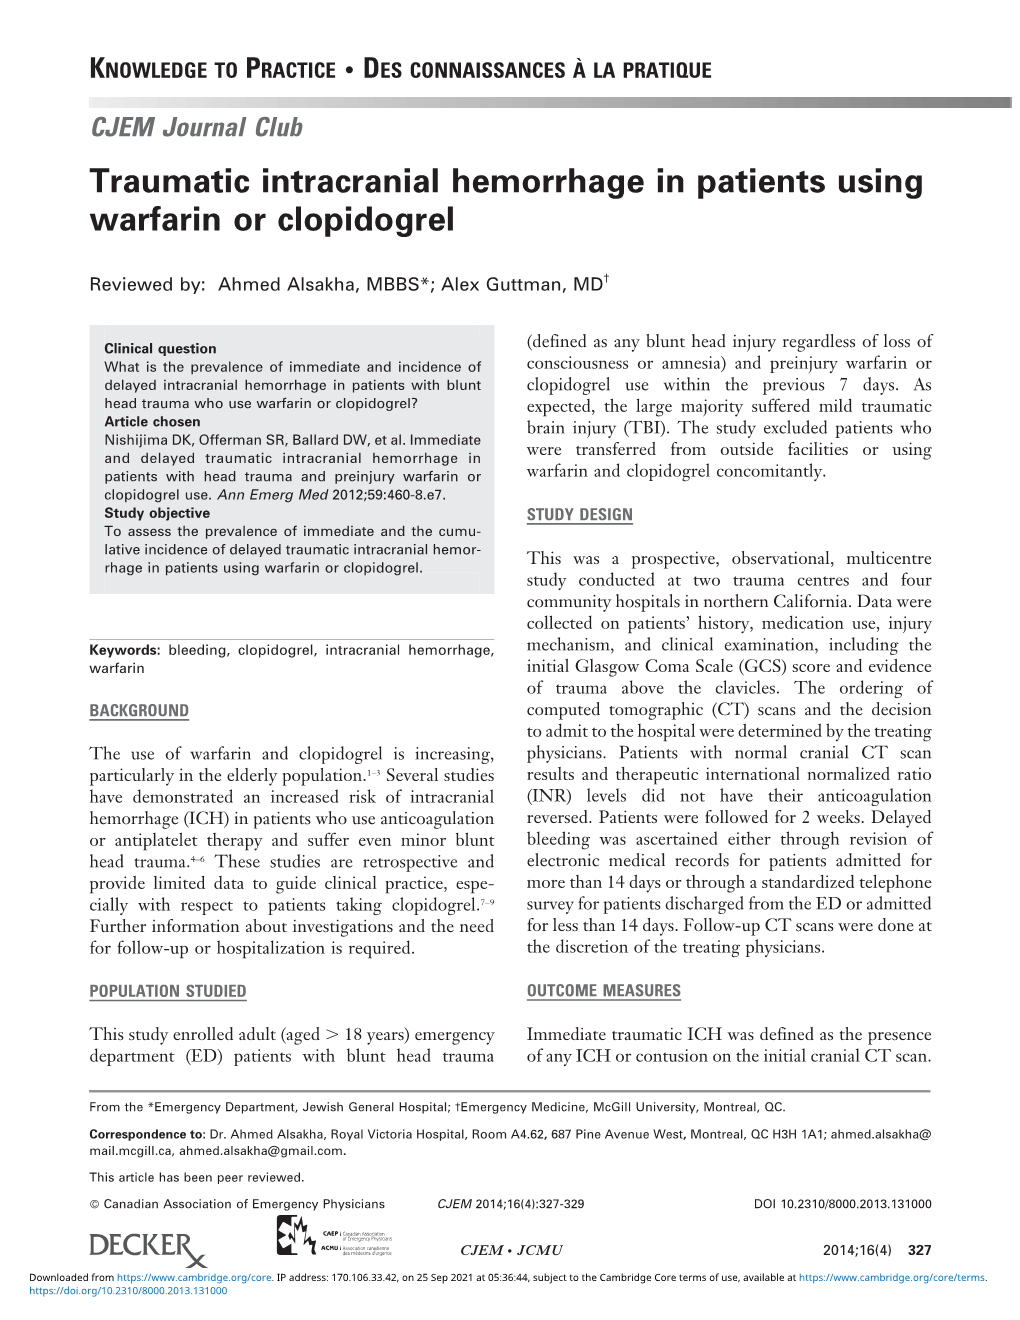 Traumatic Intracranial Hemorrhage in Patients Using Warfarin Or Clopidogrel